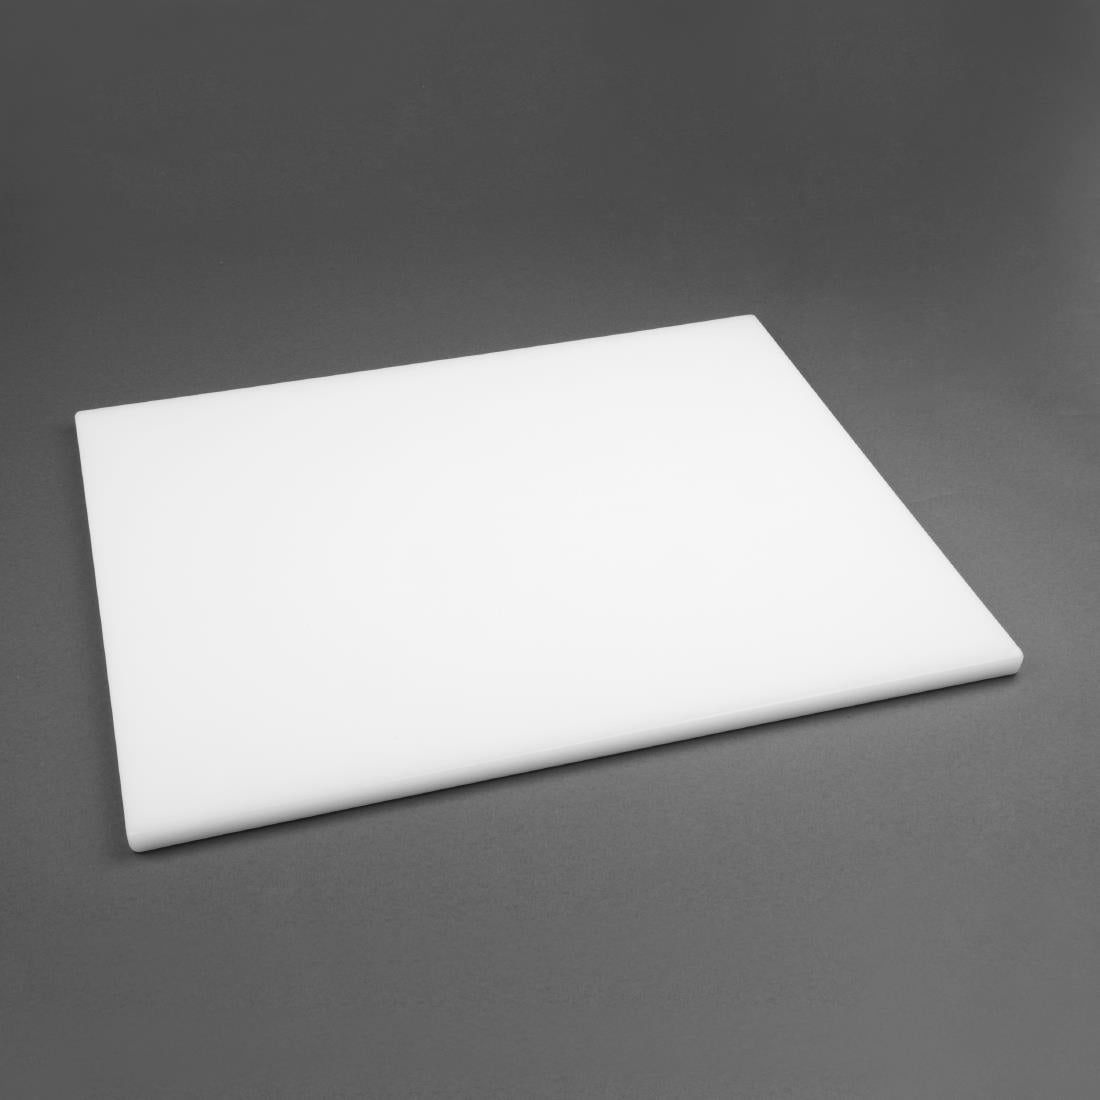 Hygiplas Thick Low Density White Chopping Board Large 600x450x20mm